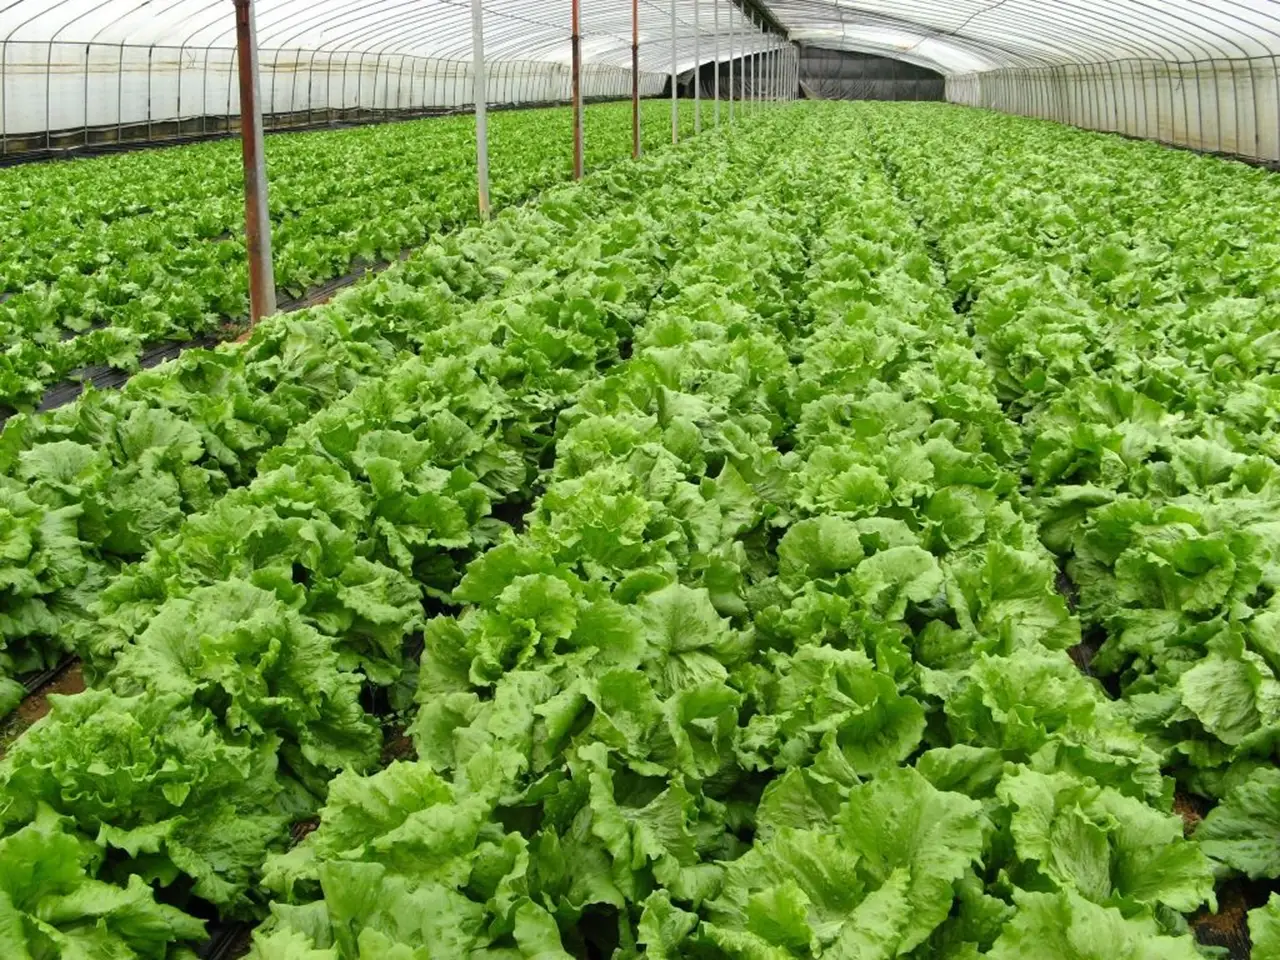 Organic farm in a regulated polyhouse